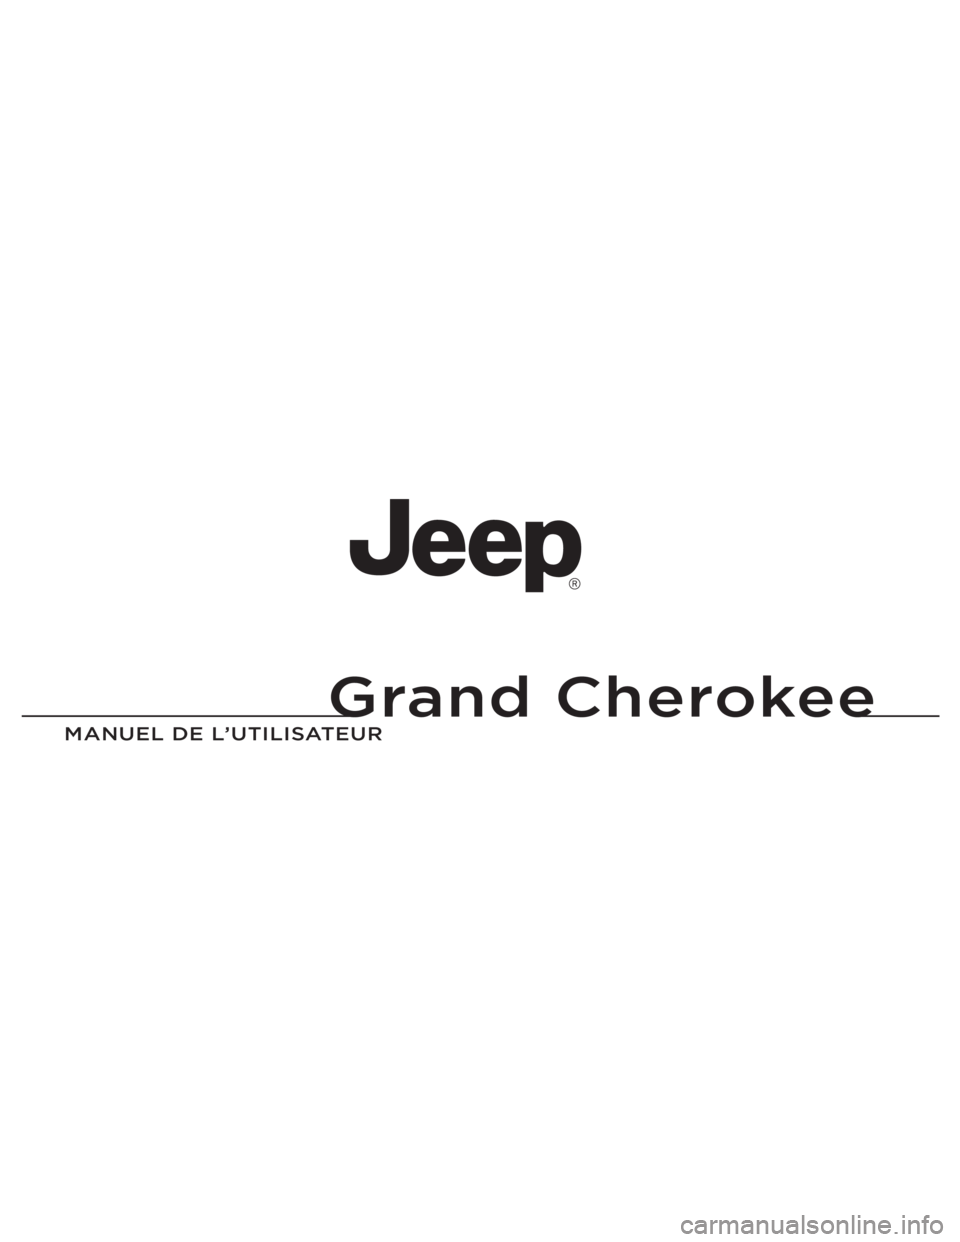 JEEP GRAND CHEROKEE 2013  Notice dentretien (in French) Grand Cherokee
MANUEL DE L’U\fILISA\fEUR 